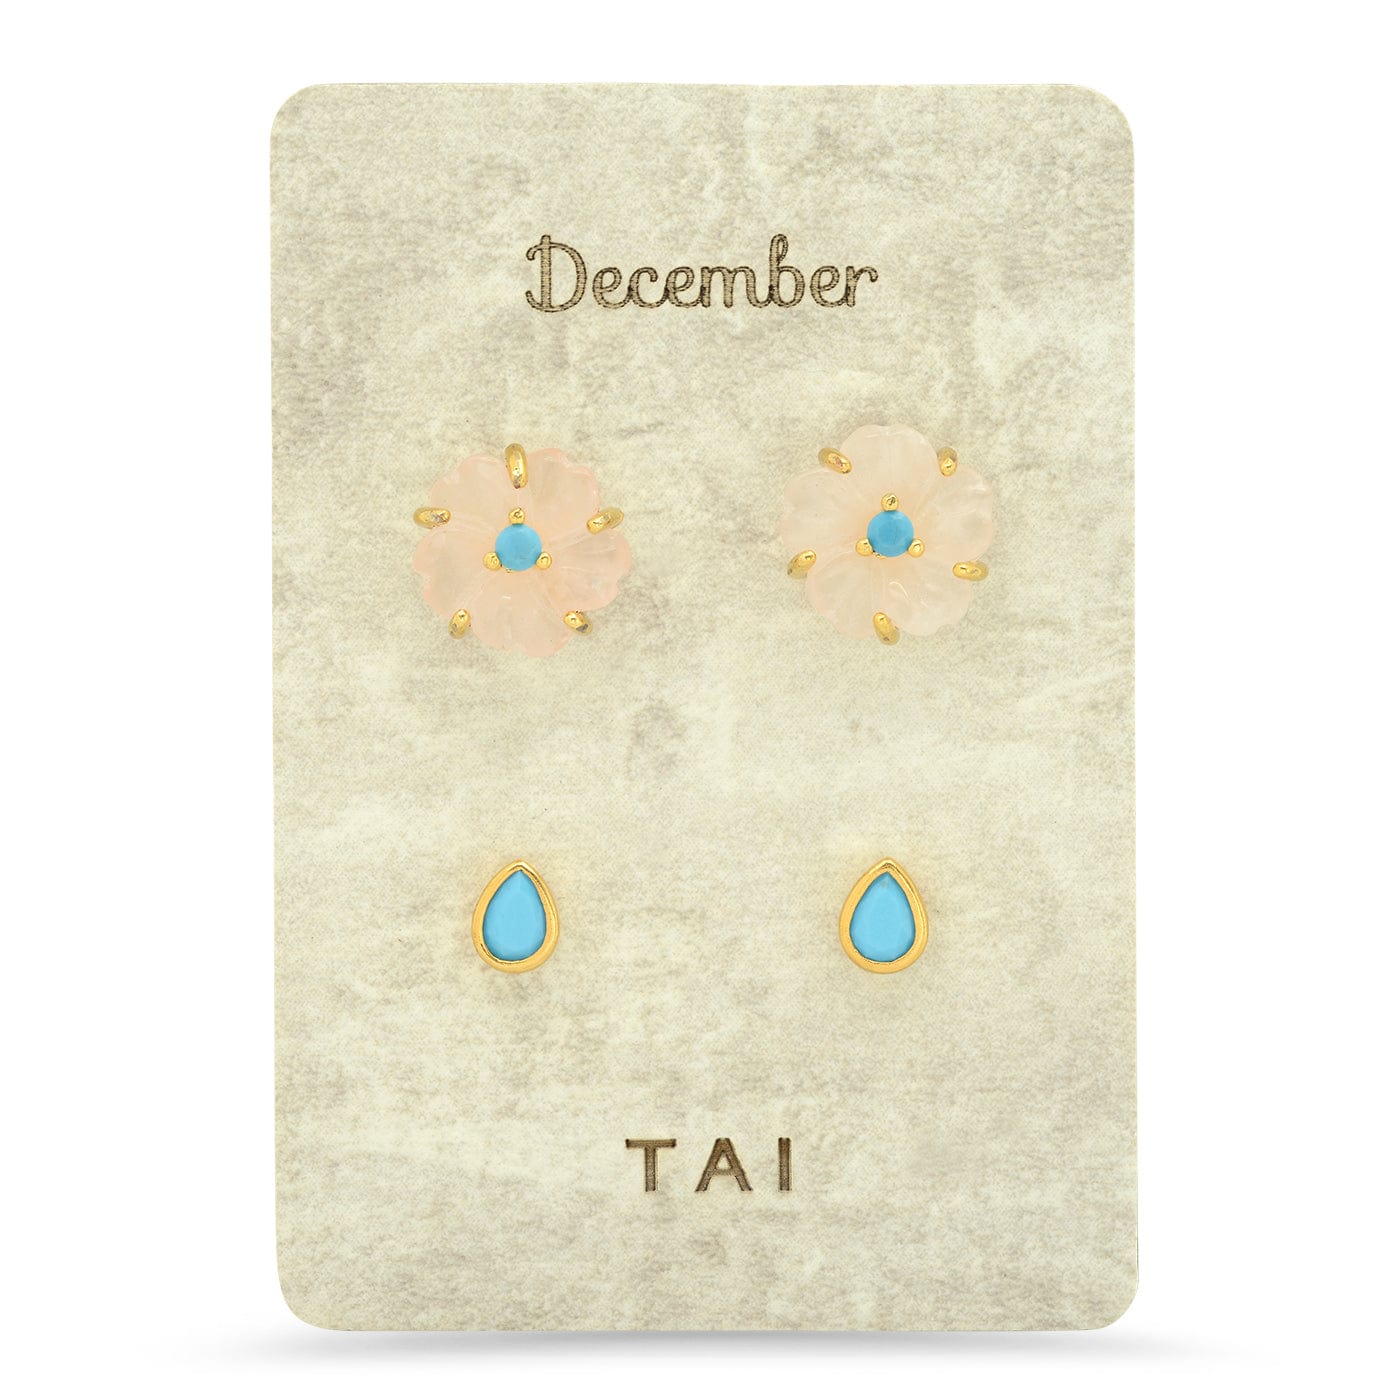 TAI JEWELRY Earrings December Rose Quartz Birthstone Earring Set